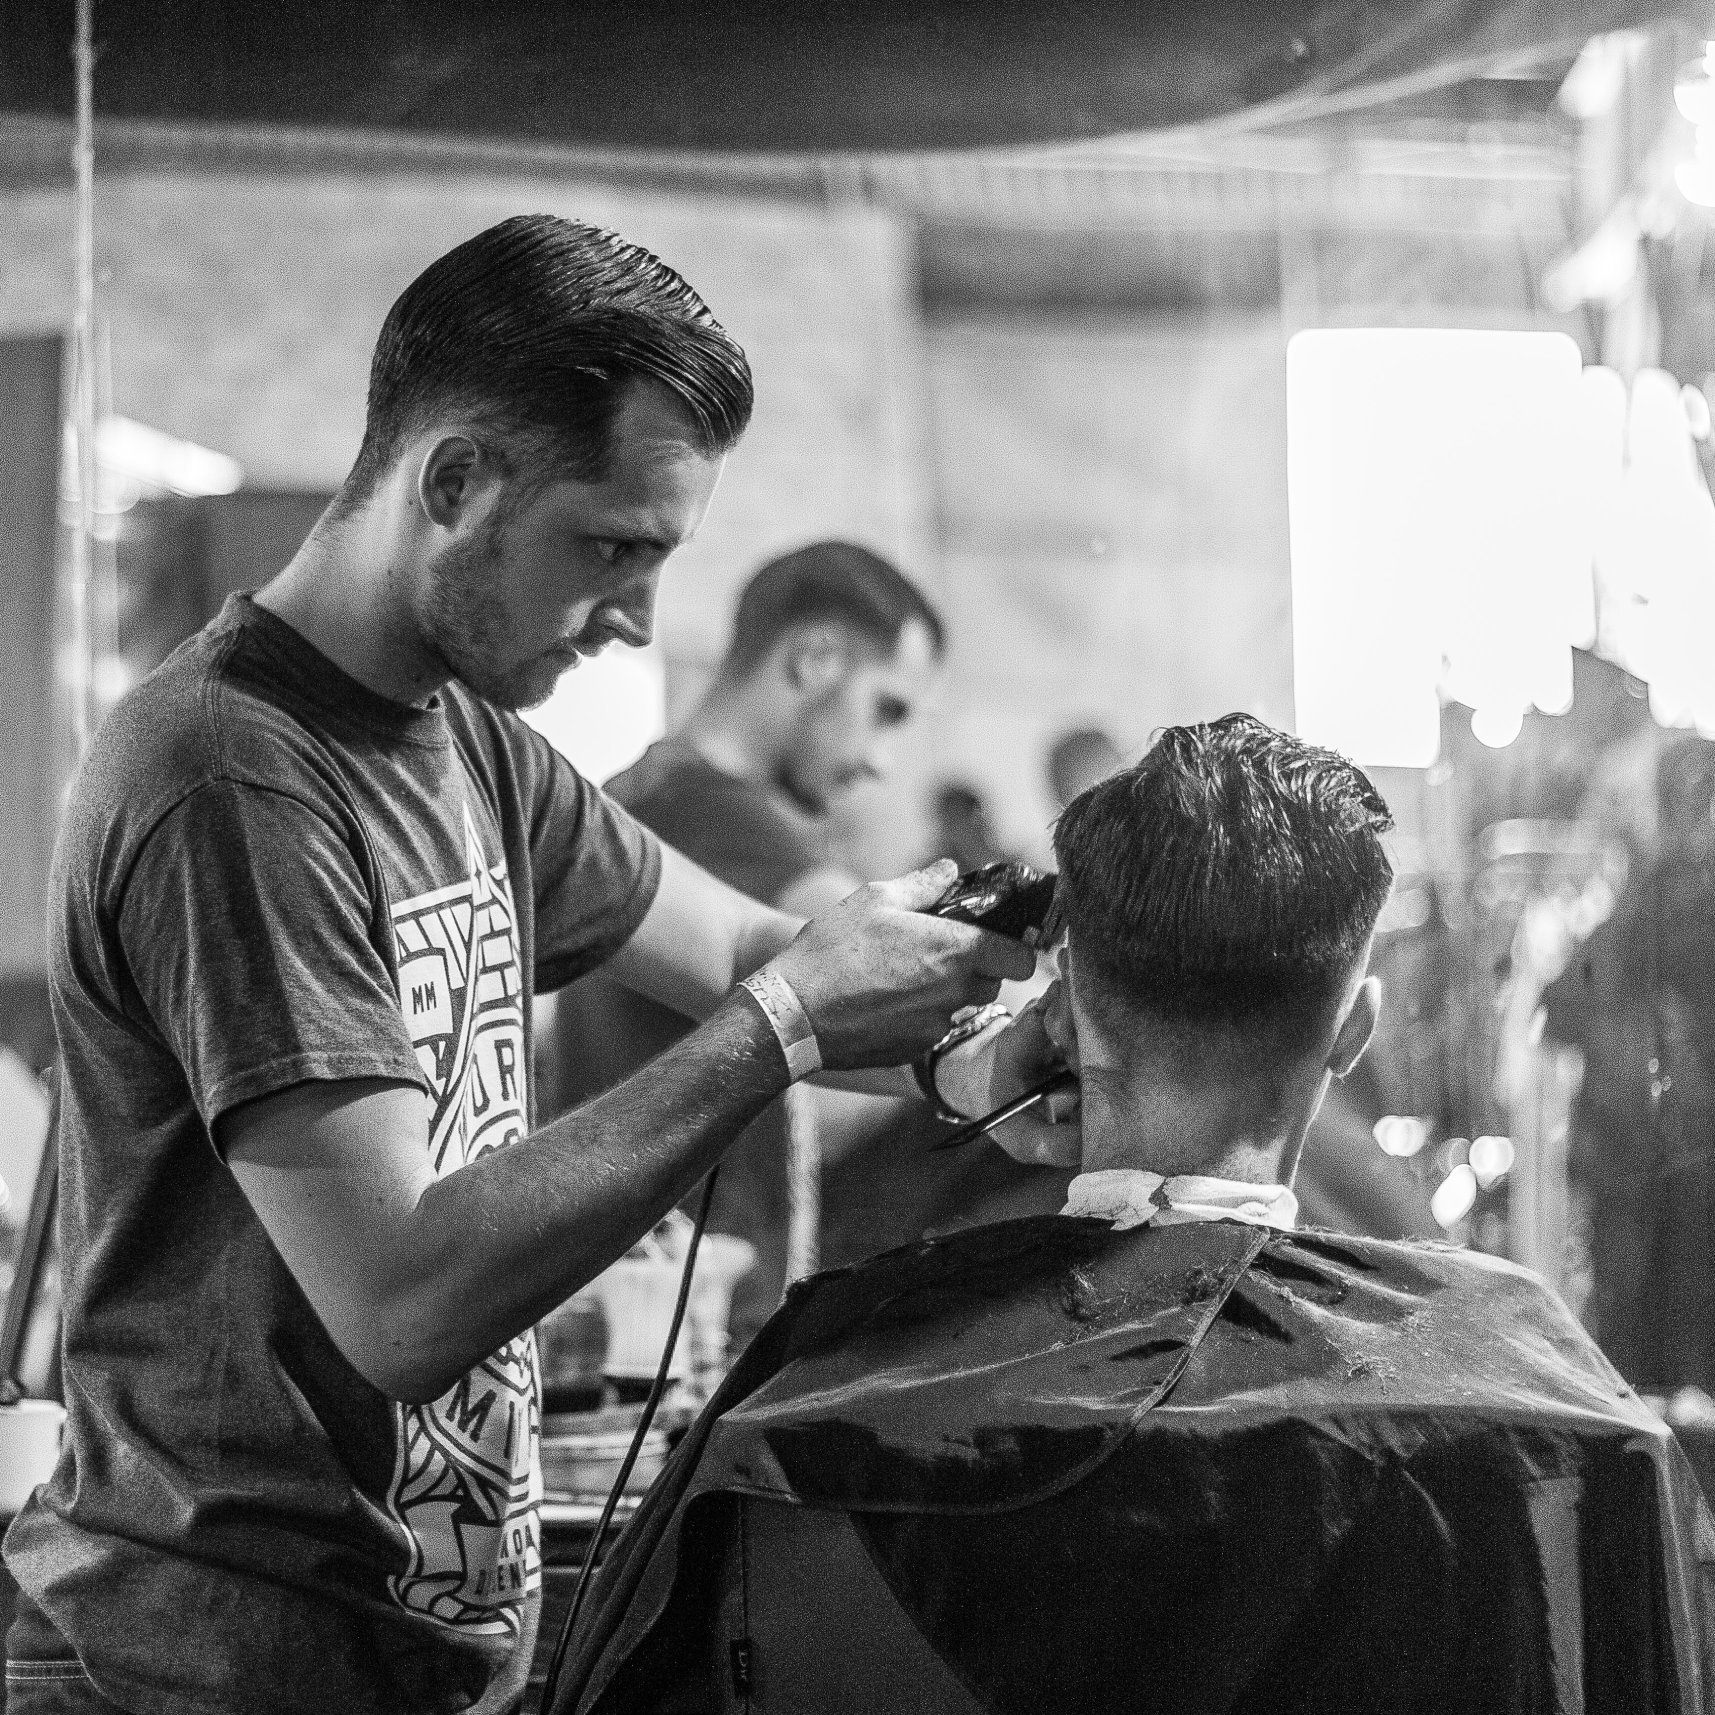 Man working at a barbershop hair salon